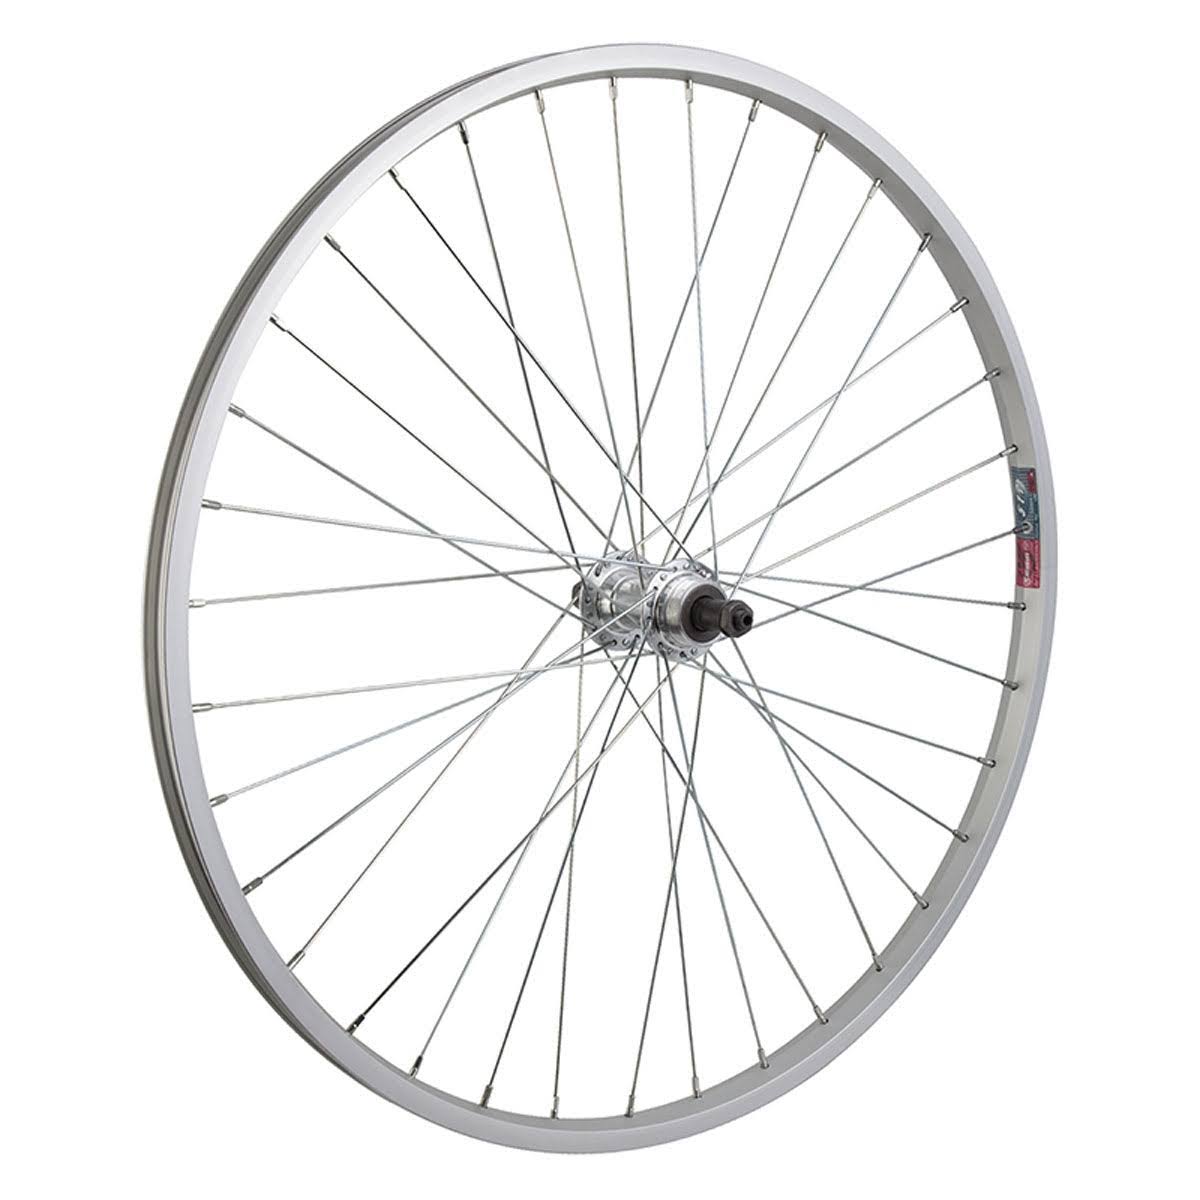 Wheel Master Rear Bicycle Wheel - 26"x1.5", 36H, Alloy, Silver